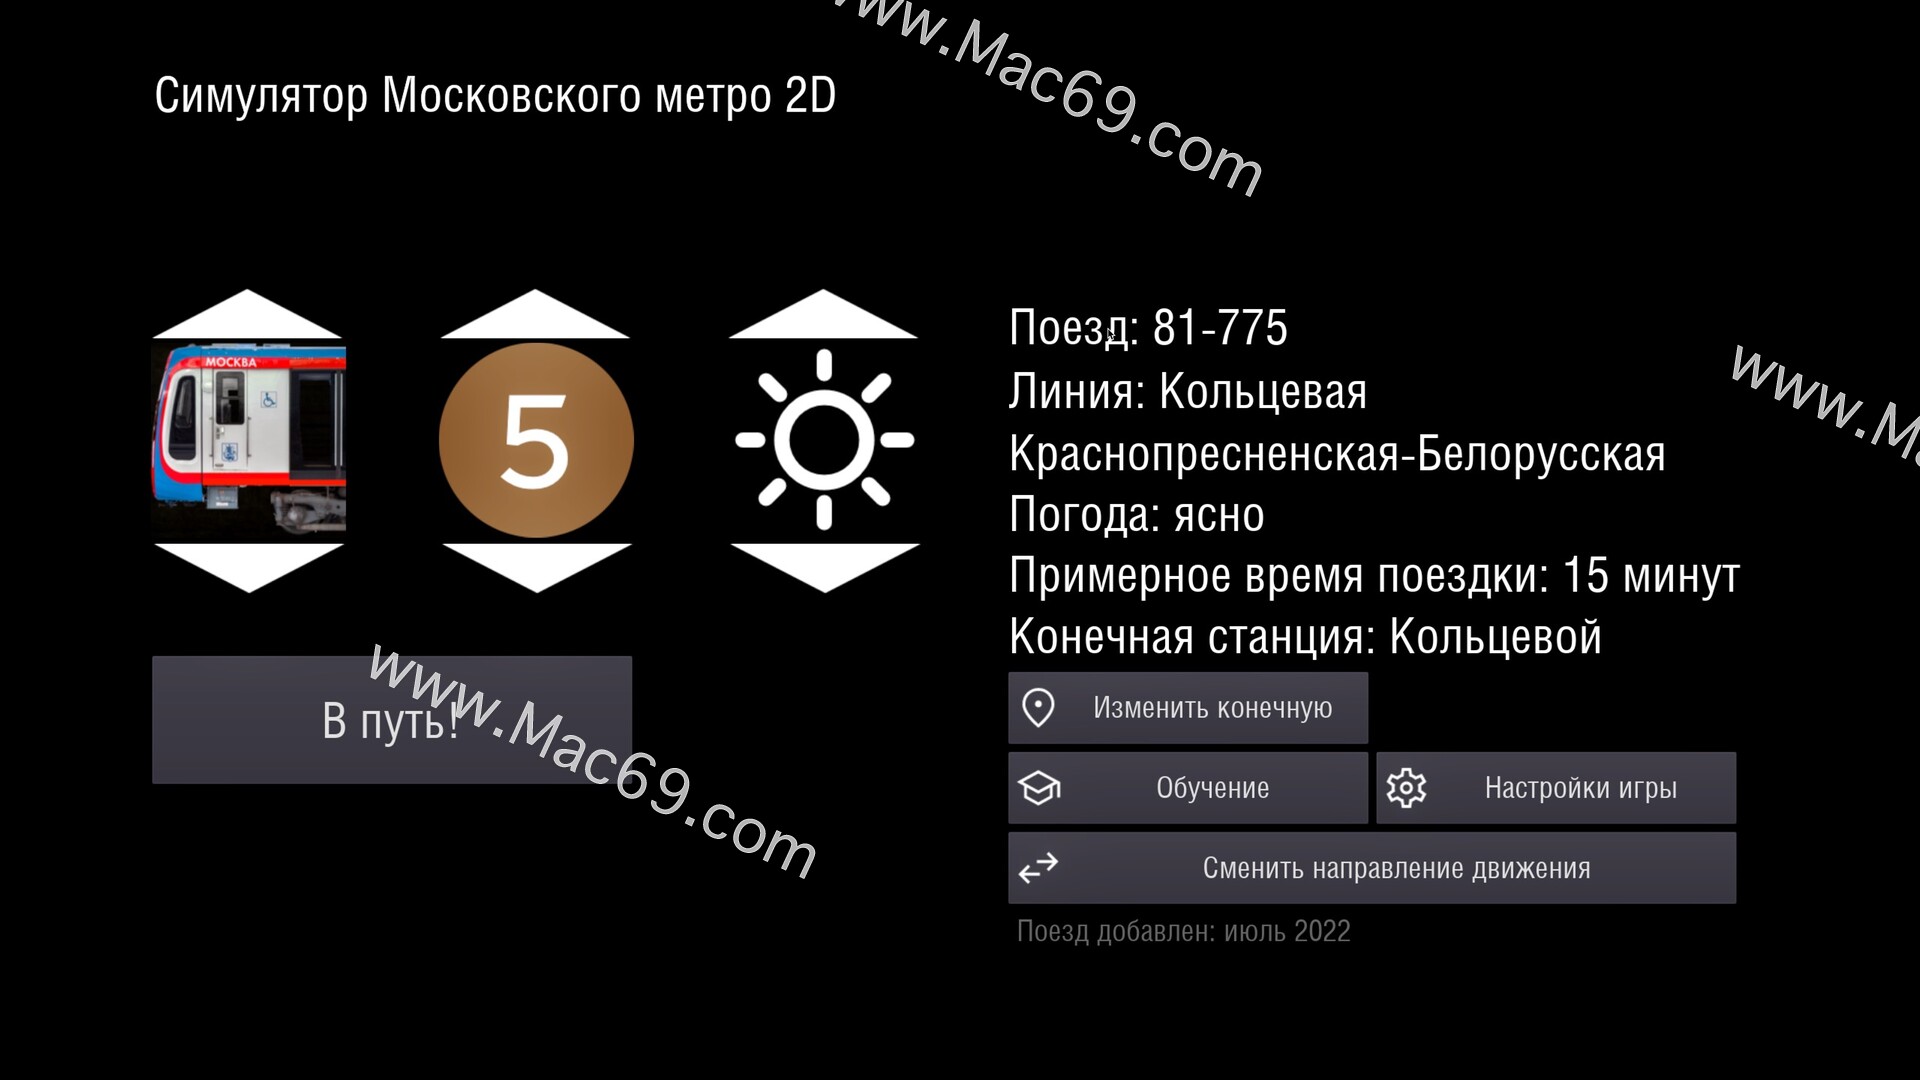 地铁模拟器Metro Simulator 2D for Mac(2D模拟游戏)